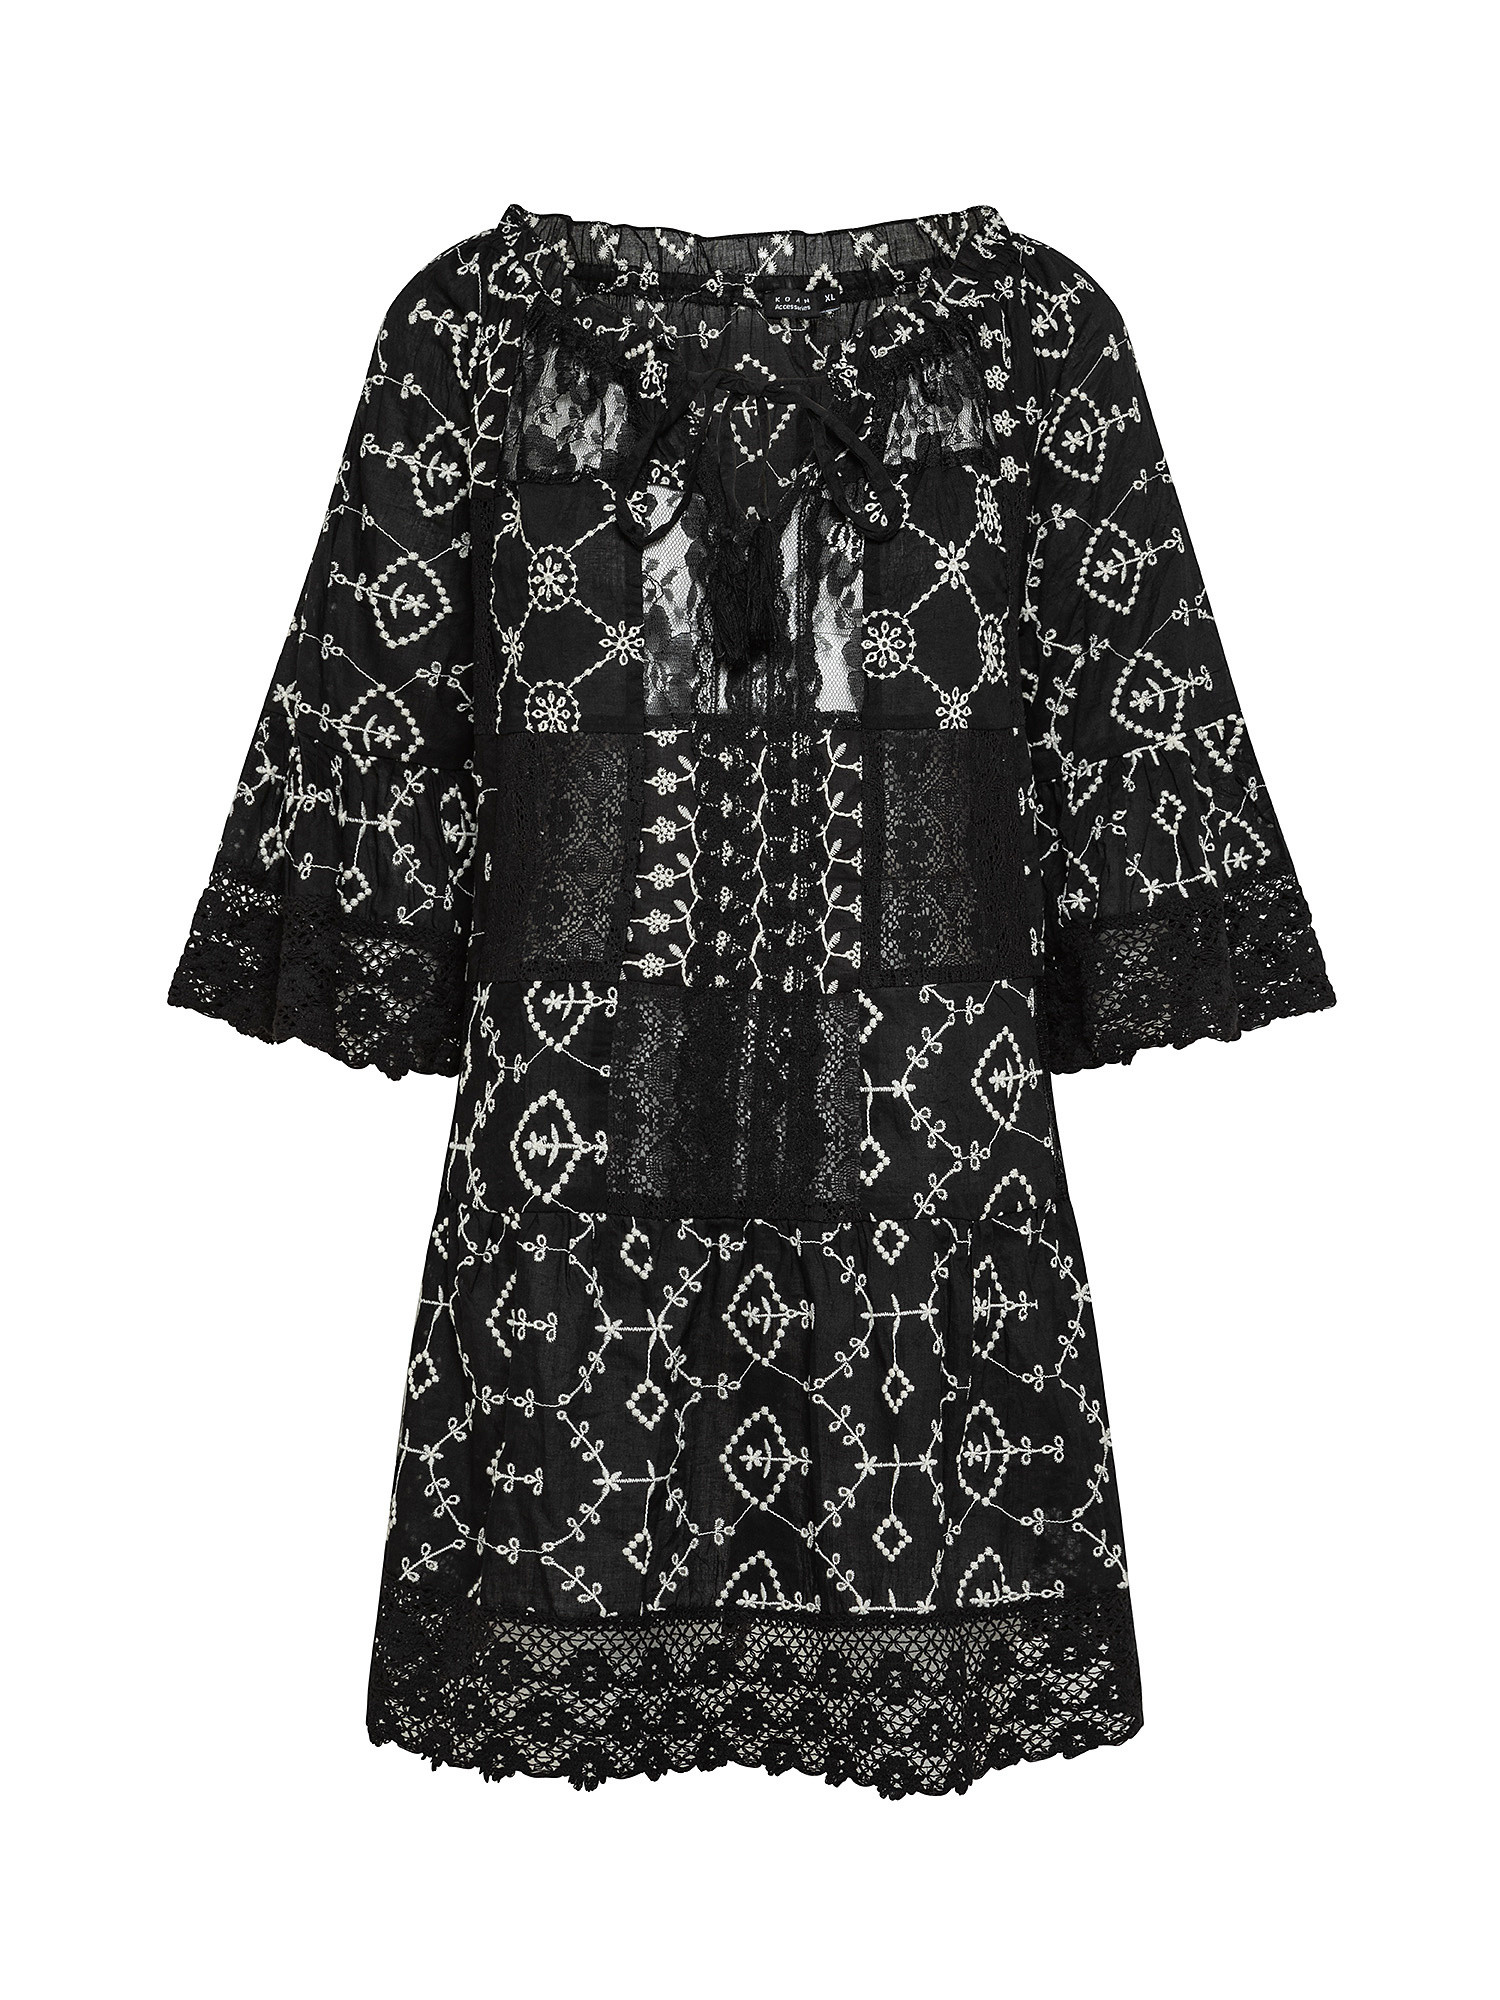 Embroidered voile dress, Black, large image number 0